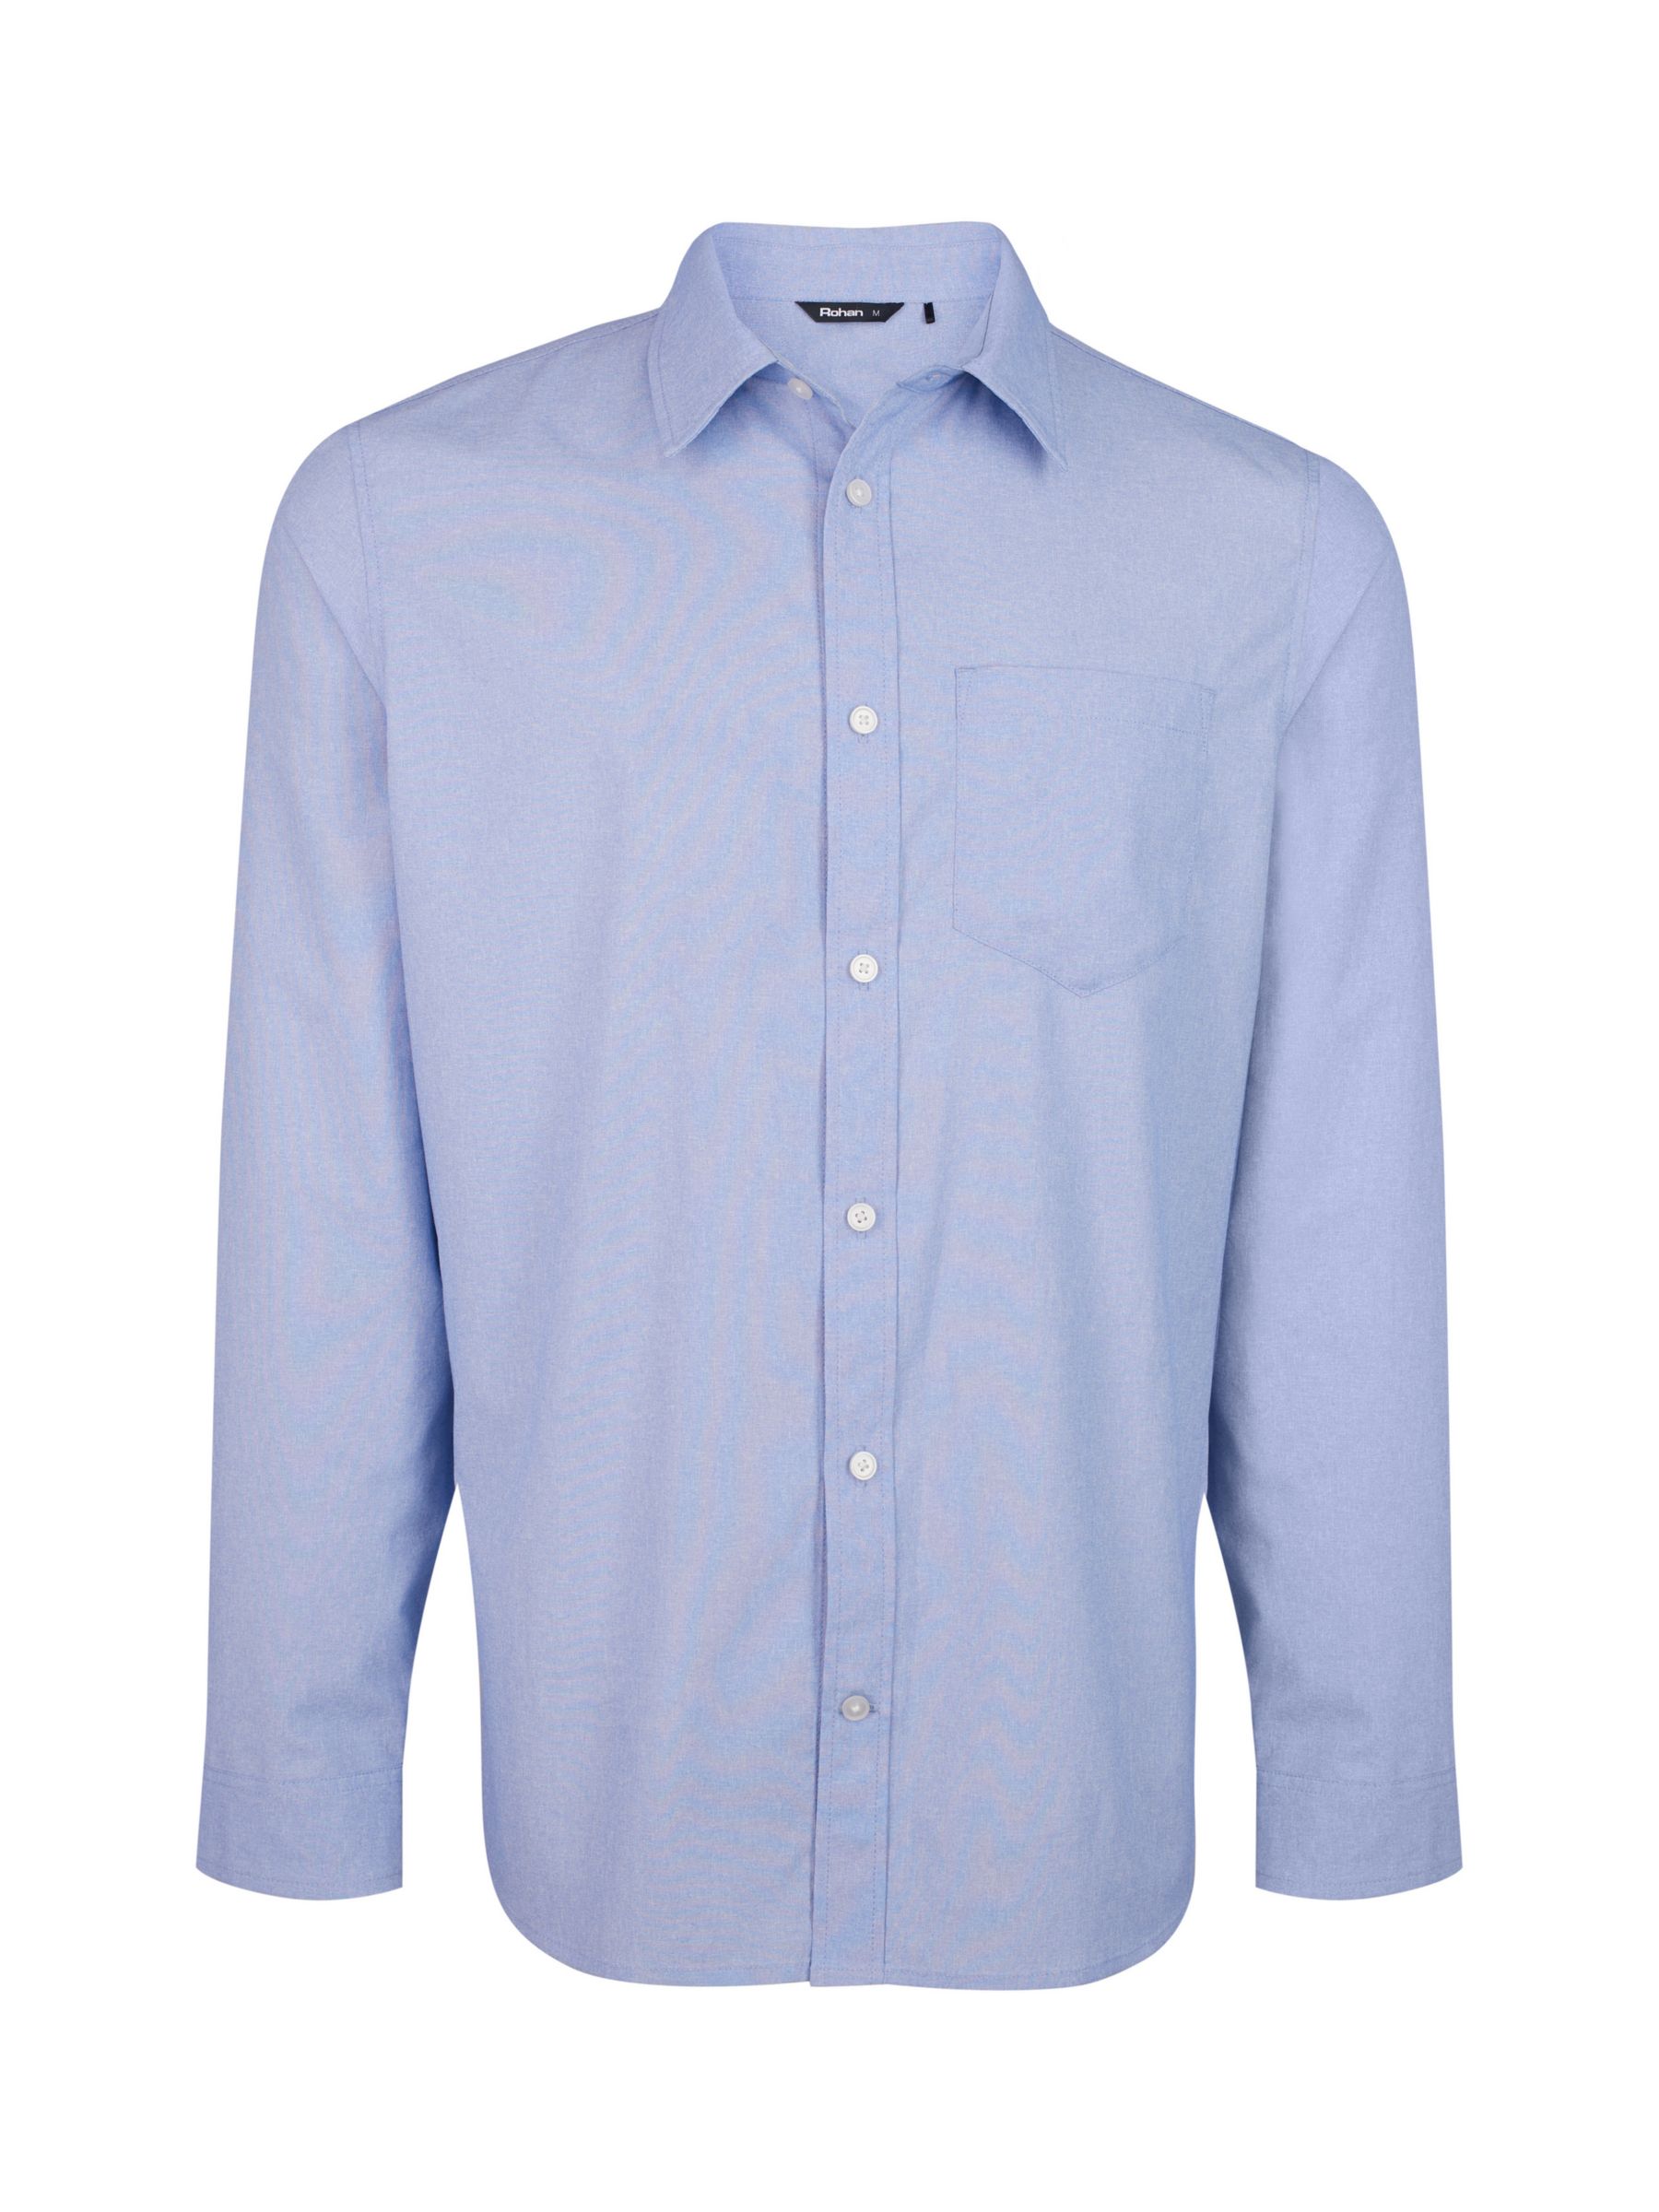 Rohan Finchley Lightweight Long Sleeve Shirt, Ridge Blue, S